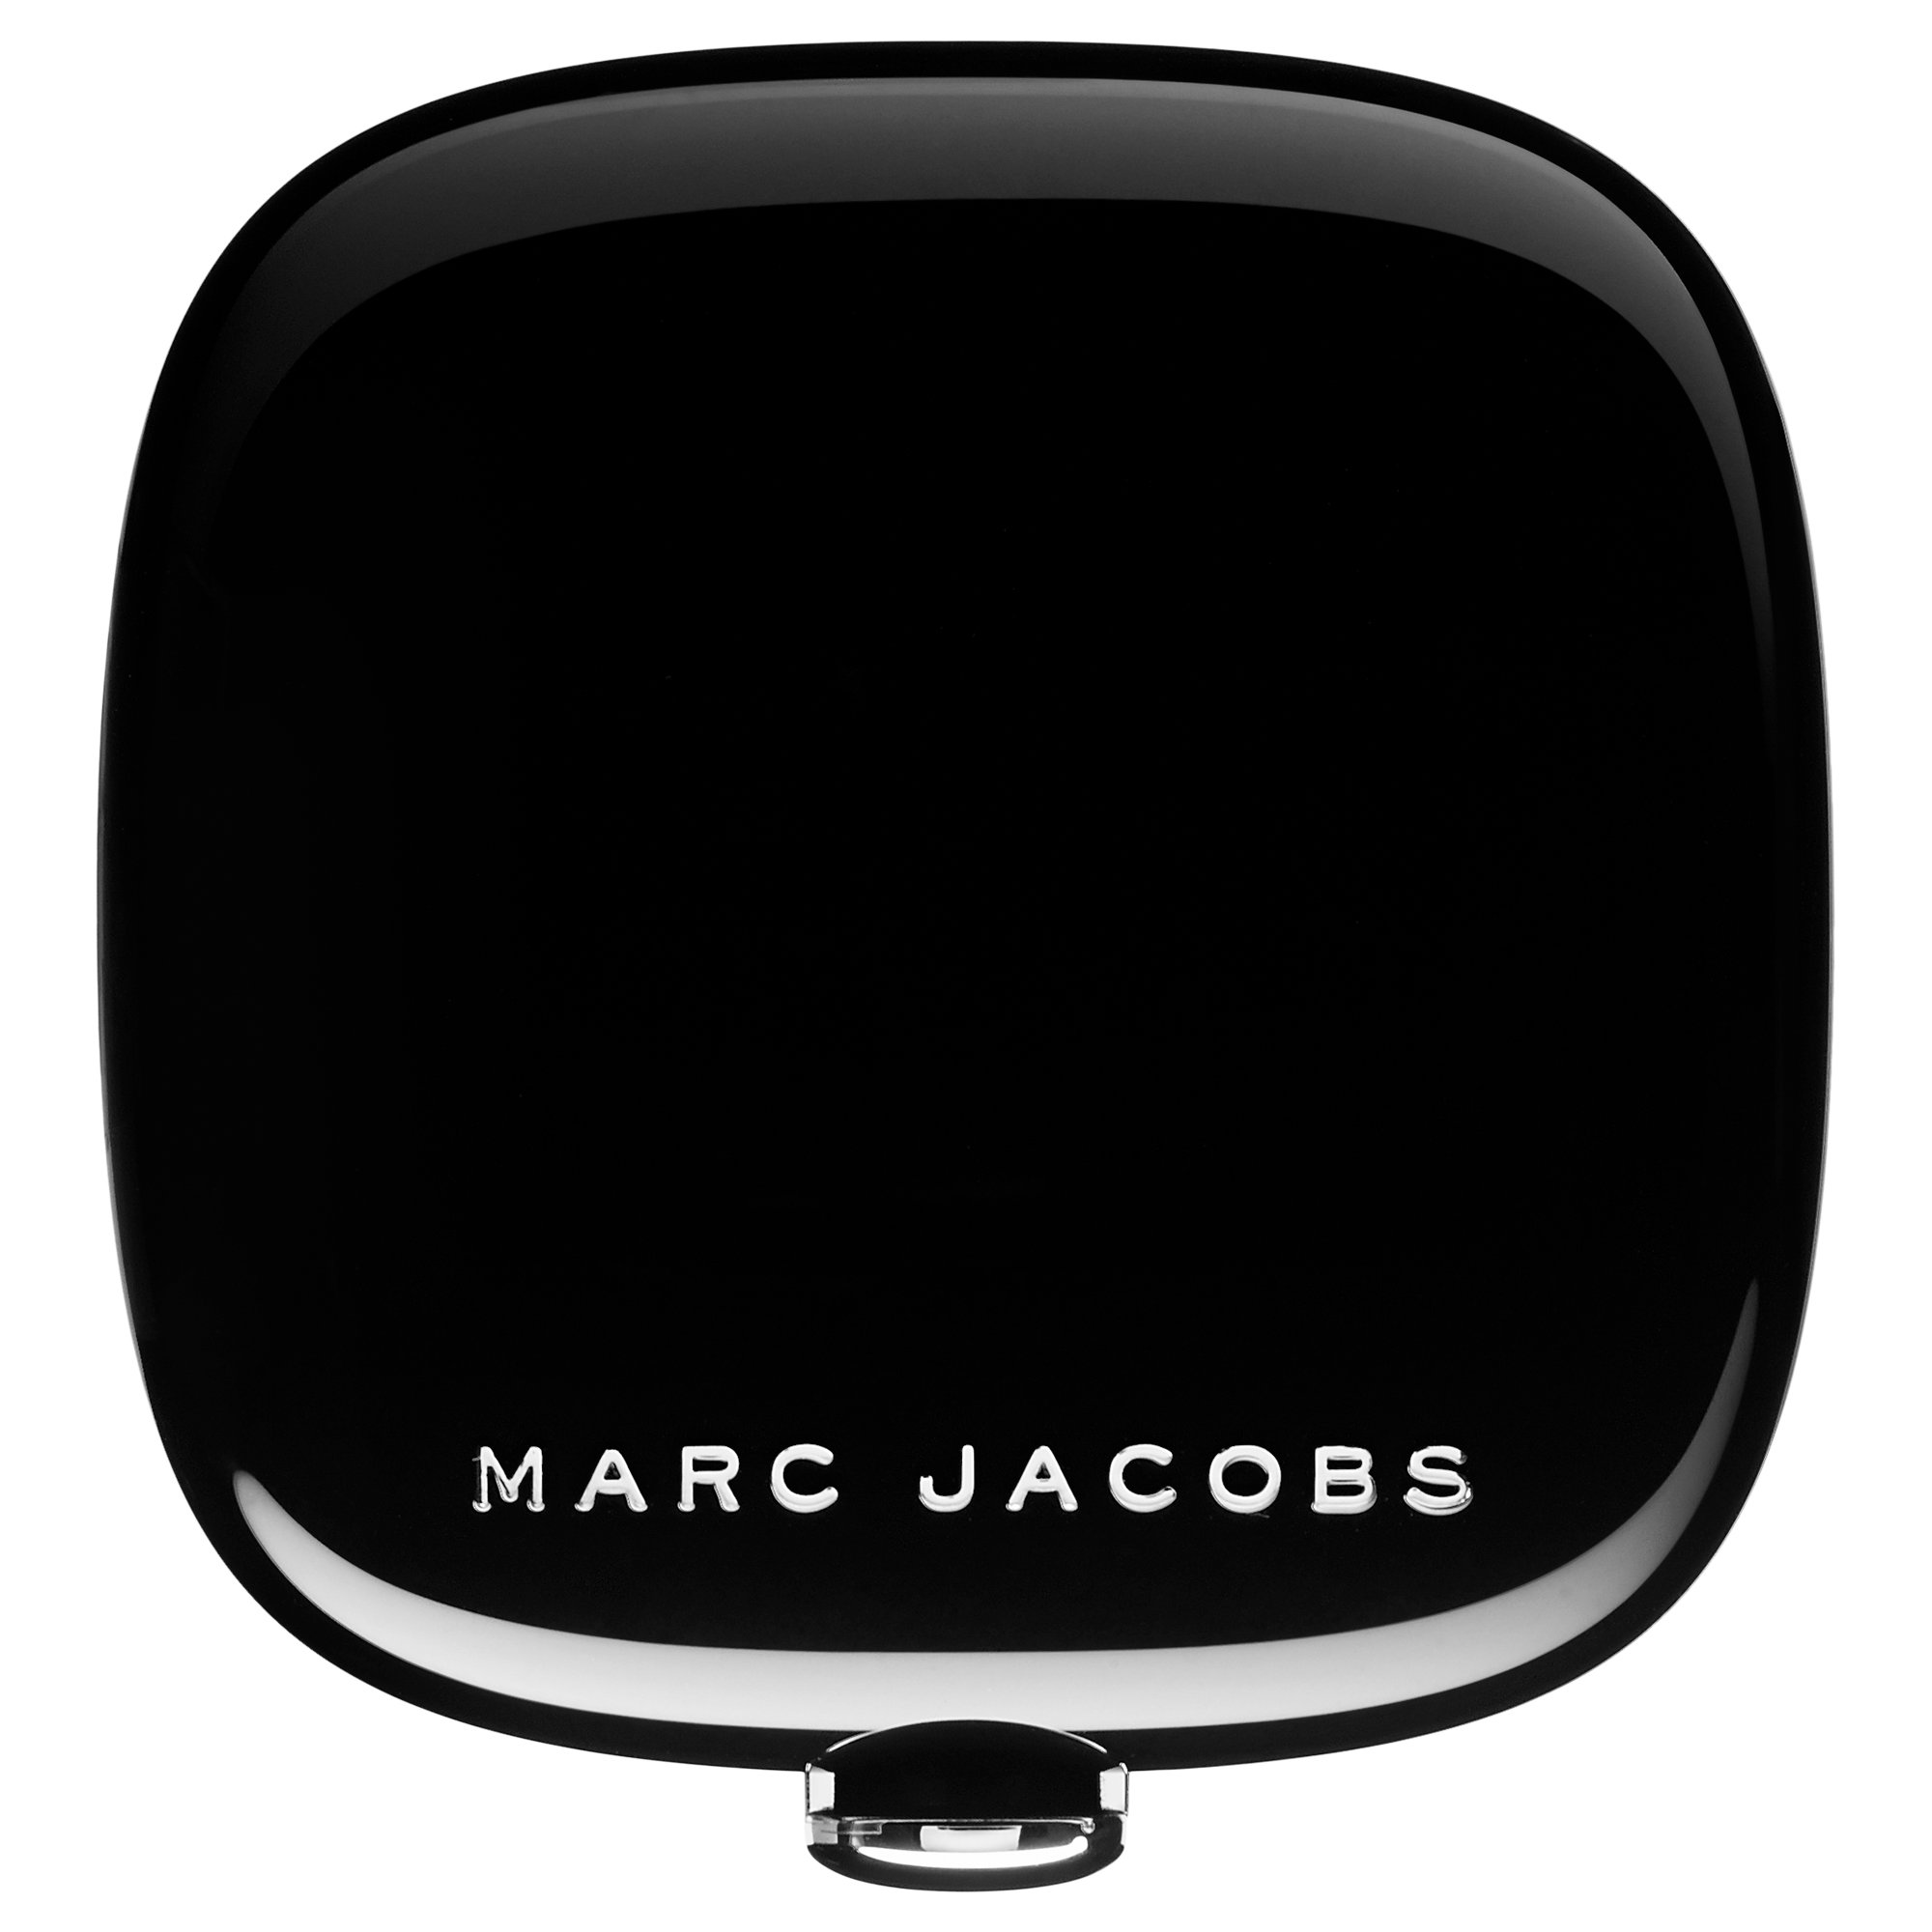 Marc Jacobs beauty line